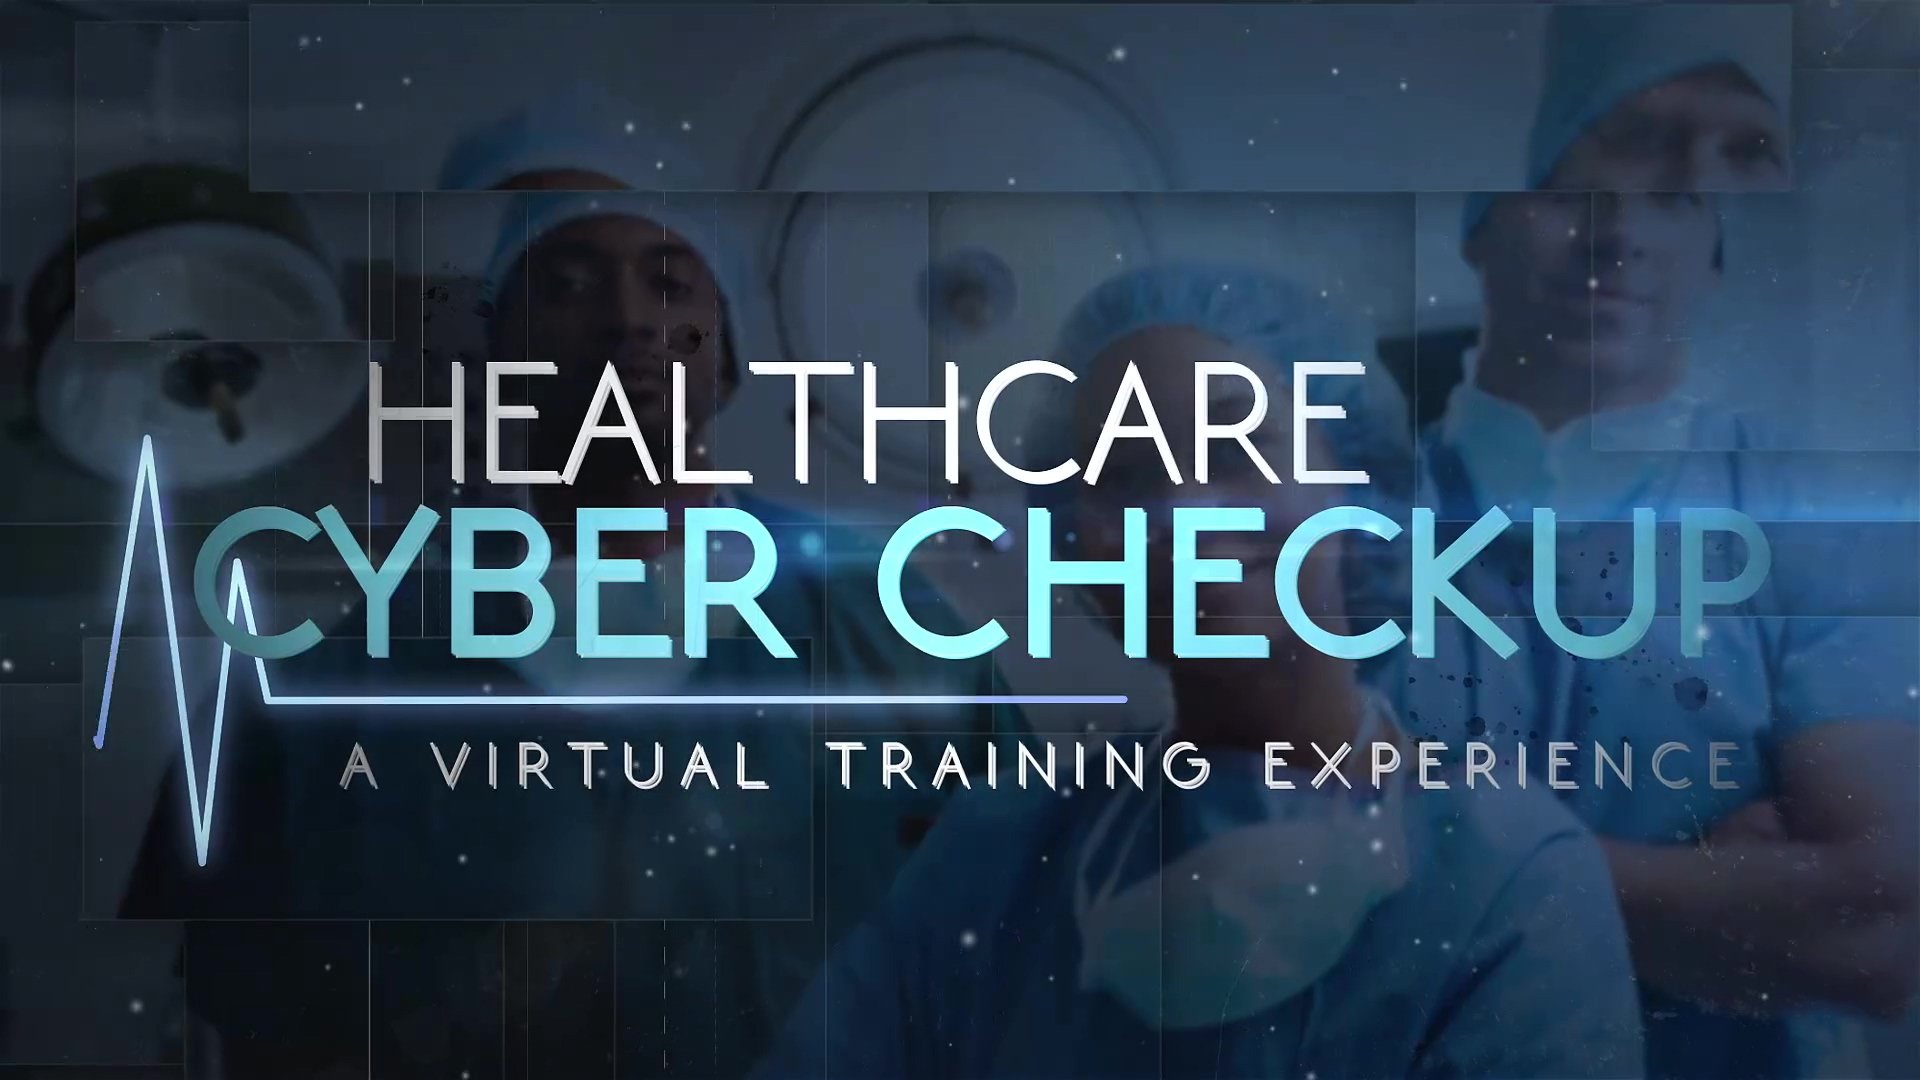 HealthcareCyberCheck_TRAILER_3mbps-thumb